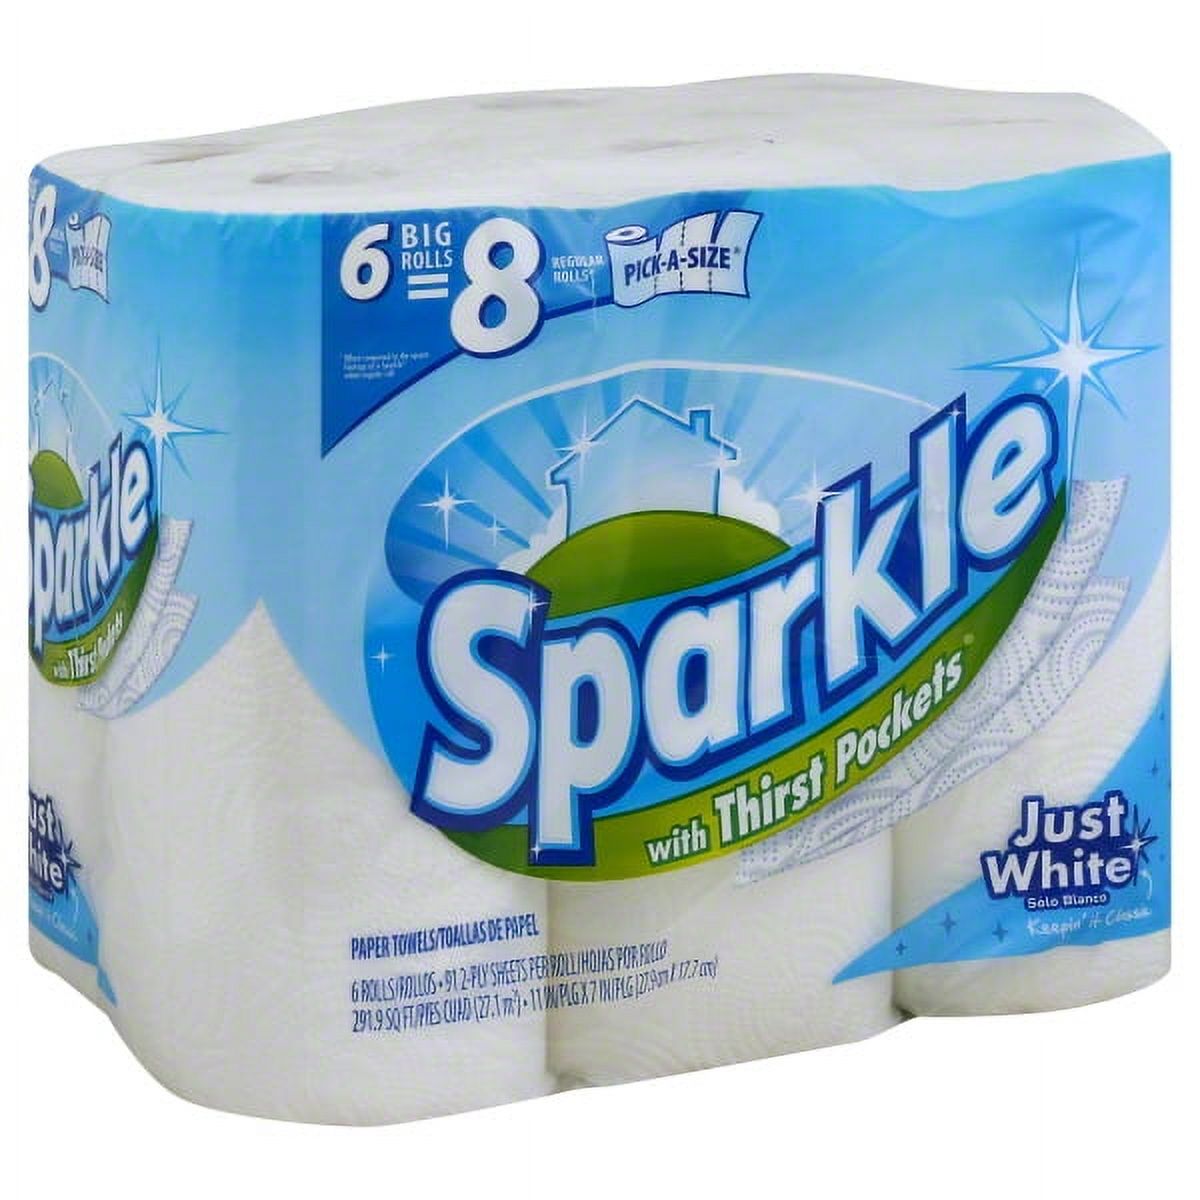 Sparkle Paper Towels, Pick-A-Size, 6 Big Rolls - image 1 of 2